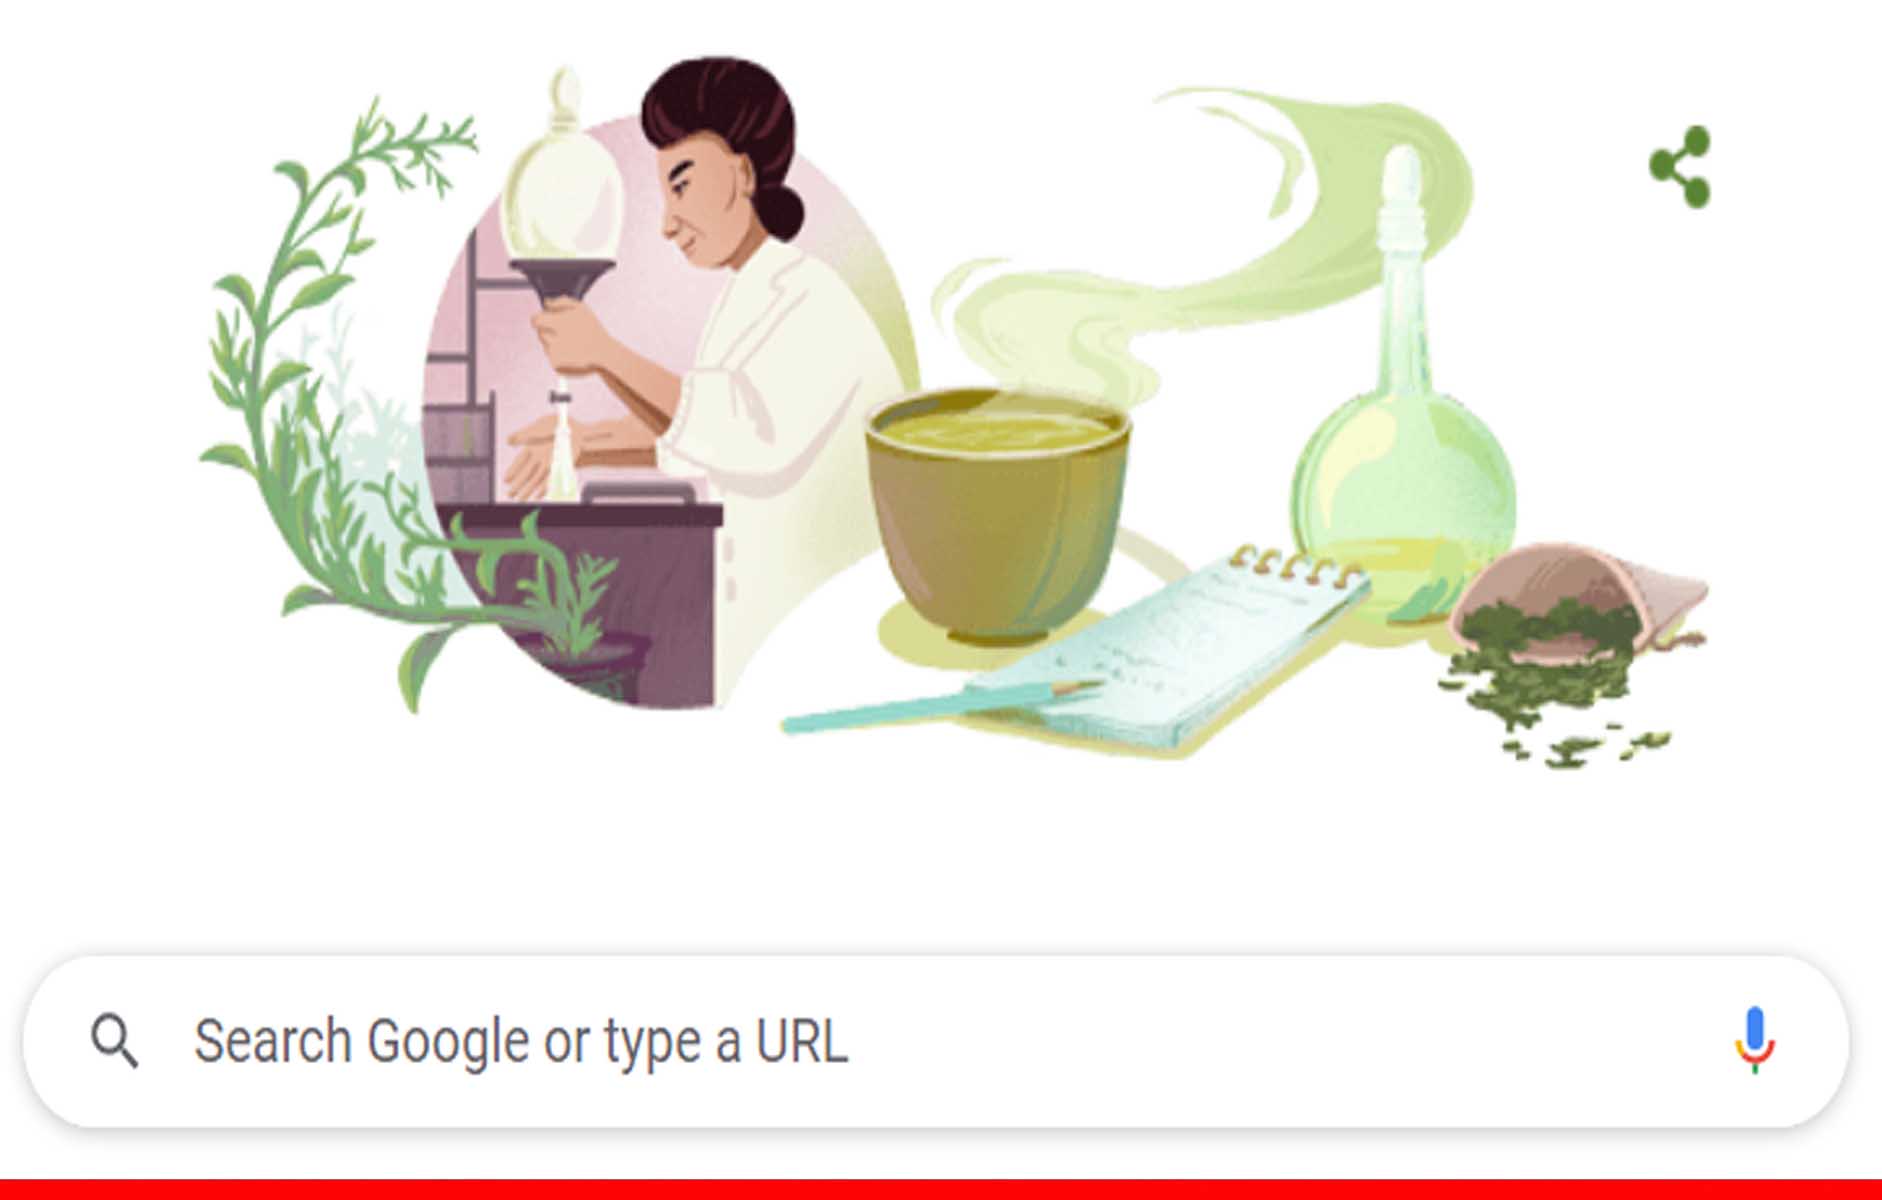 जापानी साइंटिस्ट मिशियो सुजिमुरा का जन्मदिन, गूगल ने डूडल बनाकर किया समर्पित